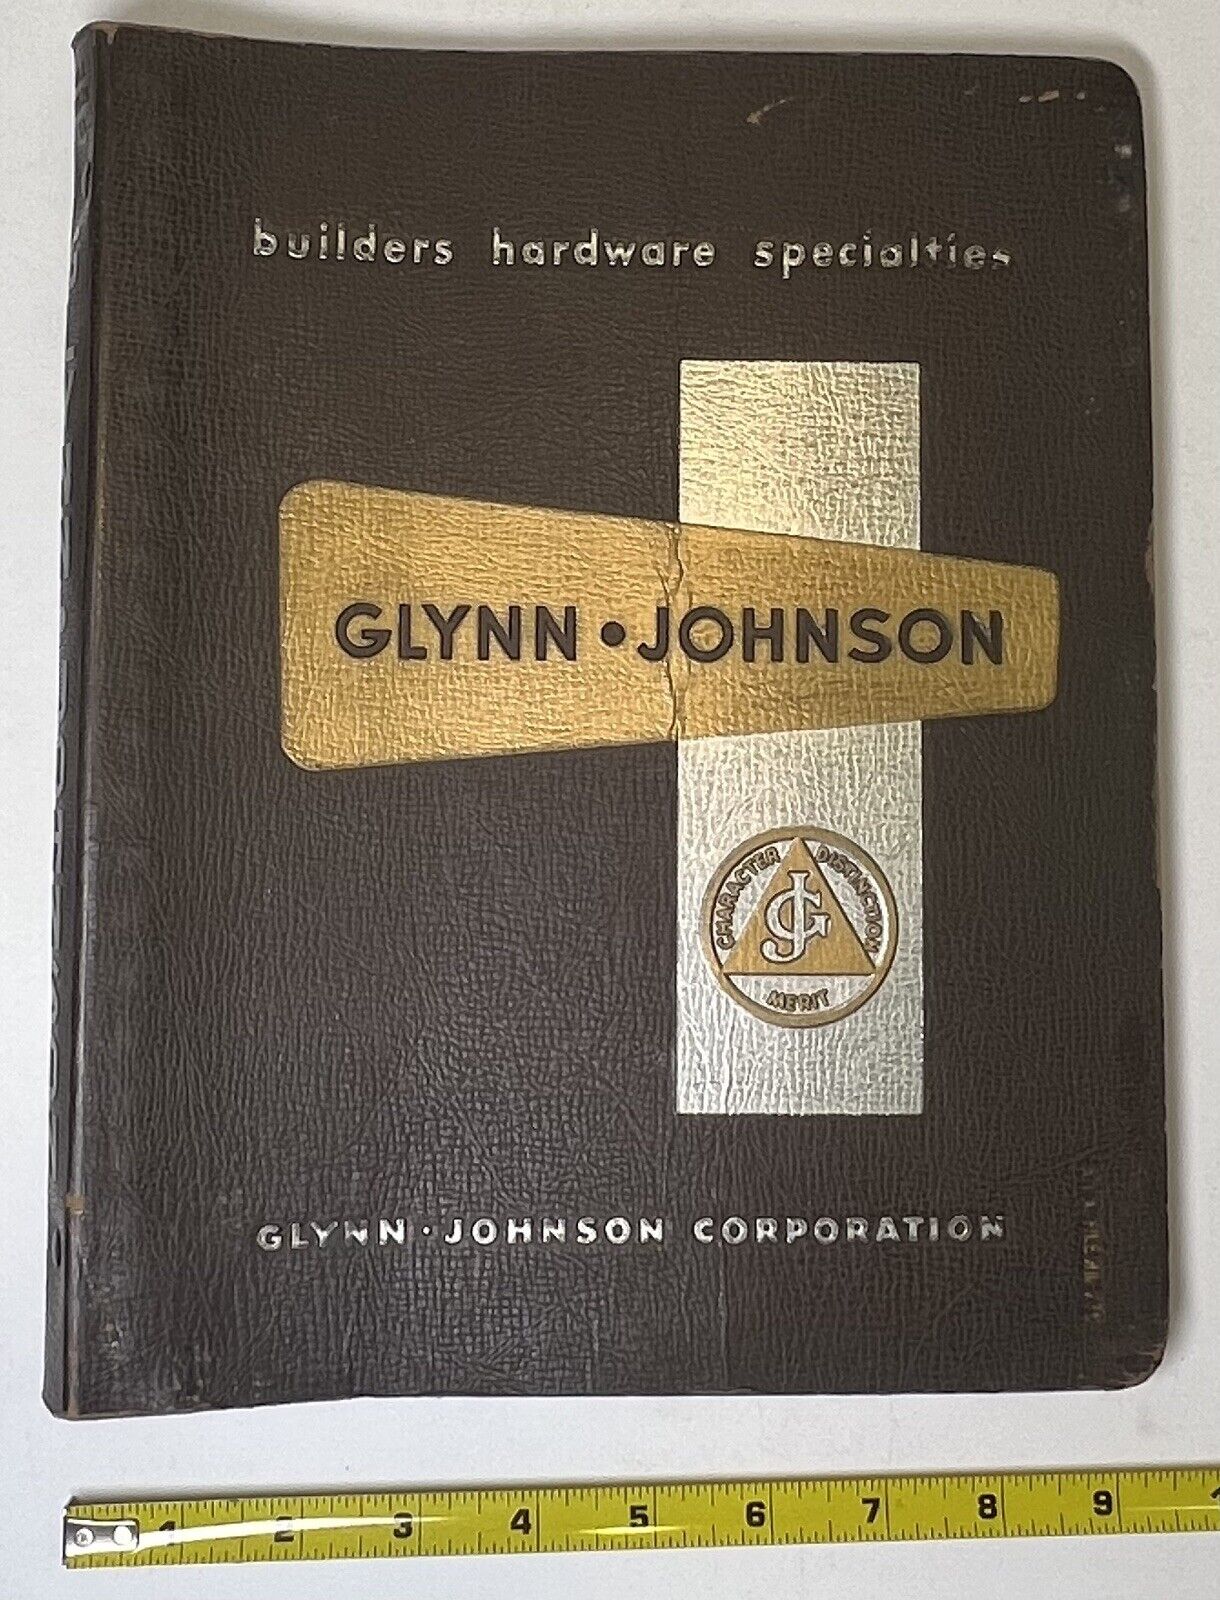 GLYNN JOHNSON 1959 Catalog No. 54-Revised with Price List No. 33 circa 1968